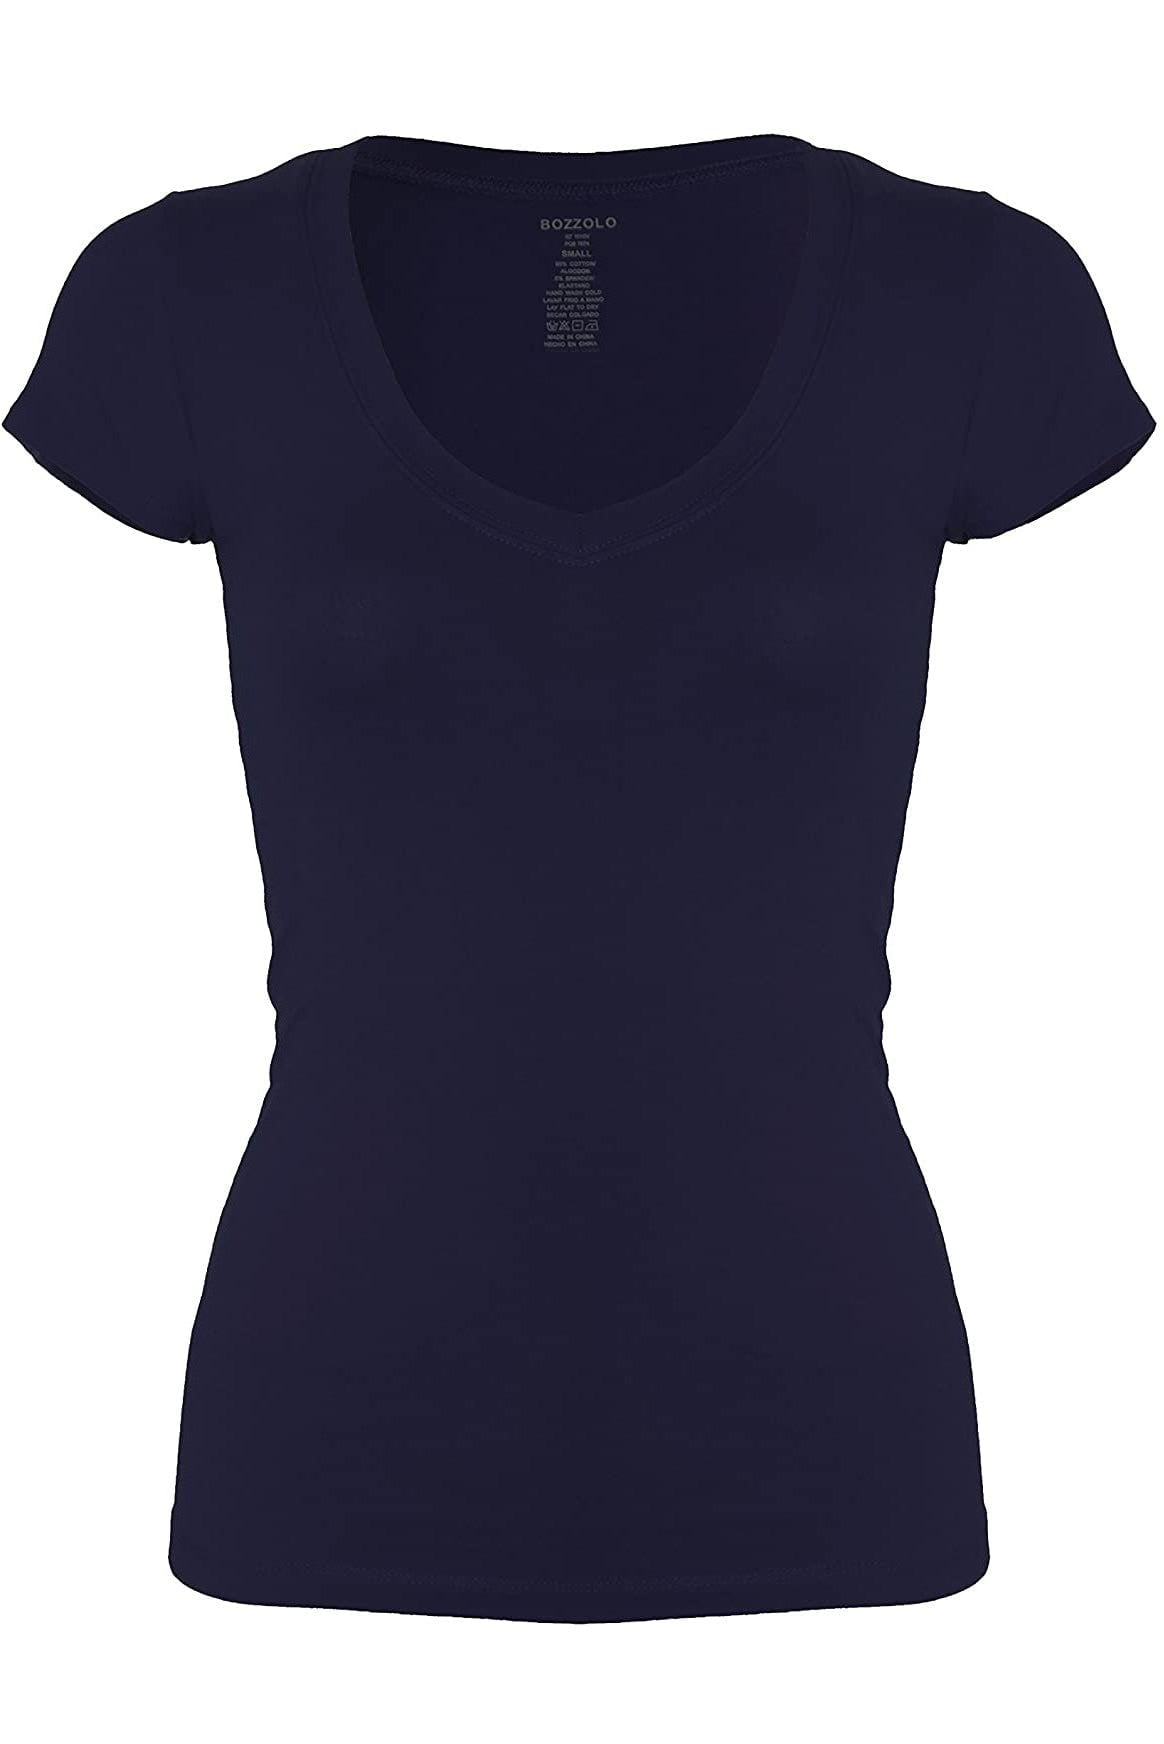 Bozzolo Women's Plain Basic V Neck Short Sleeve Cotton T-Shirts ...